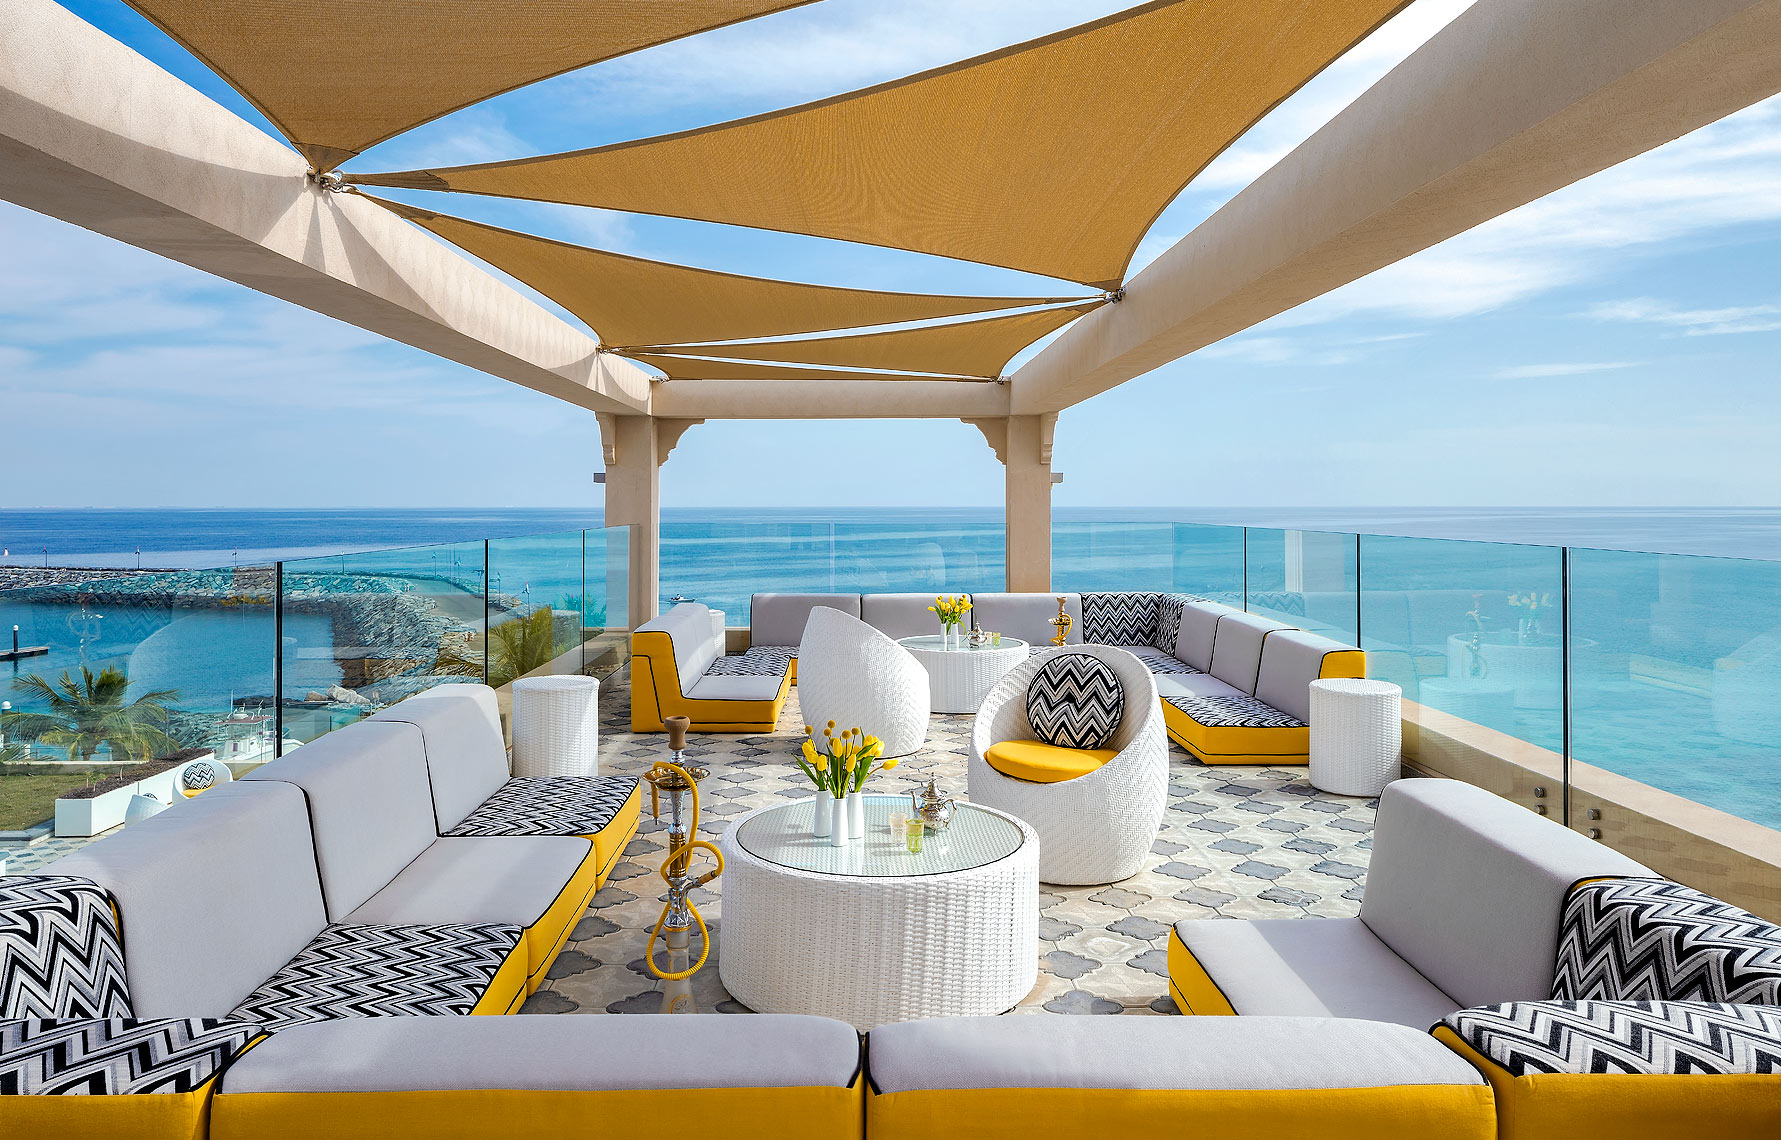 Fairmont Fujairah Resort, United Arab Emirates - Shisha Lounge